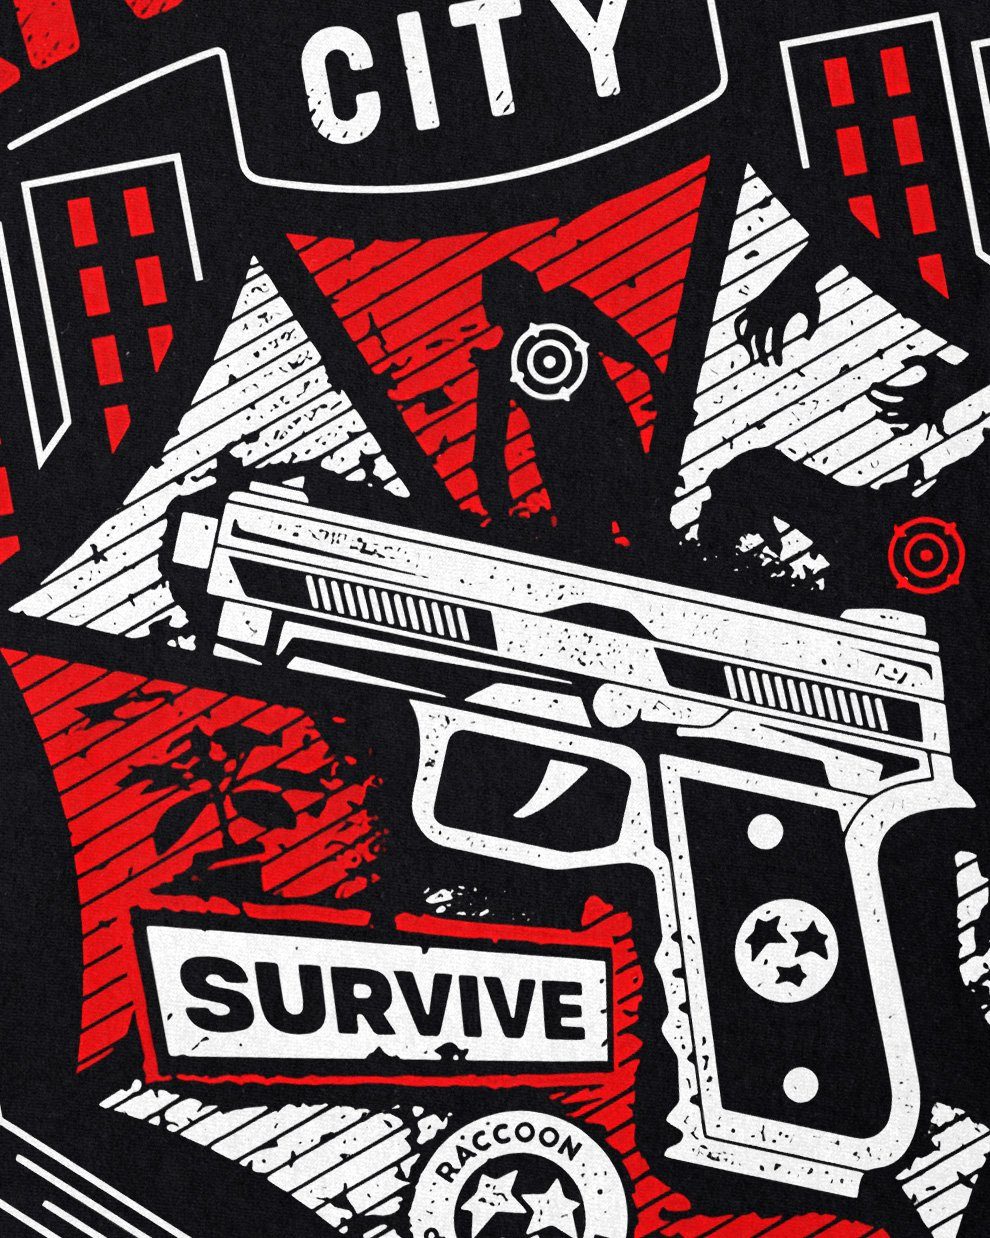 resident City evil Print-Shirt style3 T-Shirt Raccoon zombie Kinder virus corp umbrella